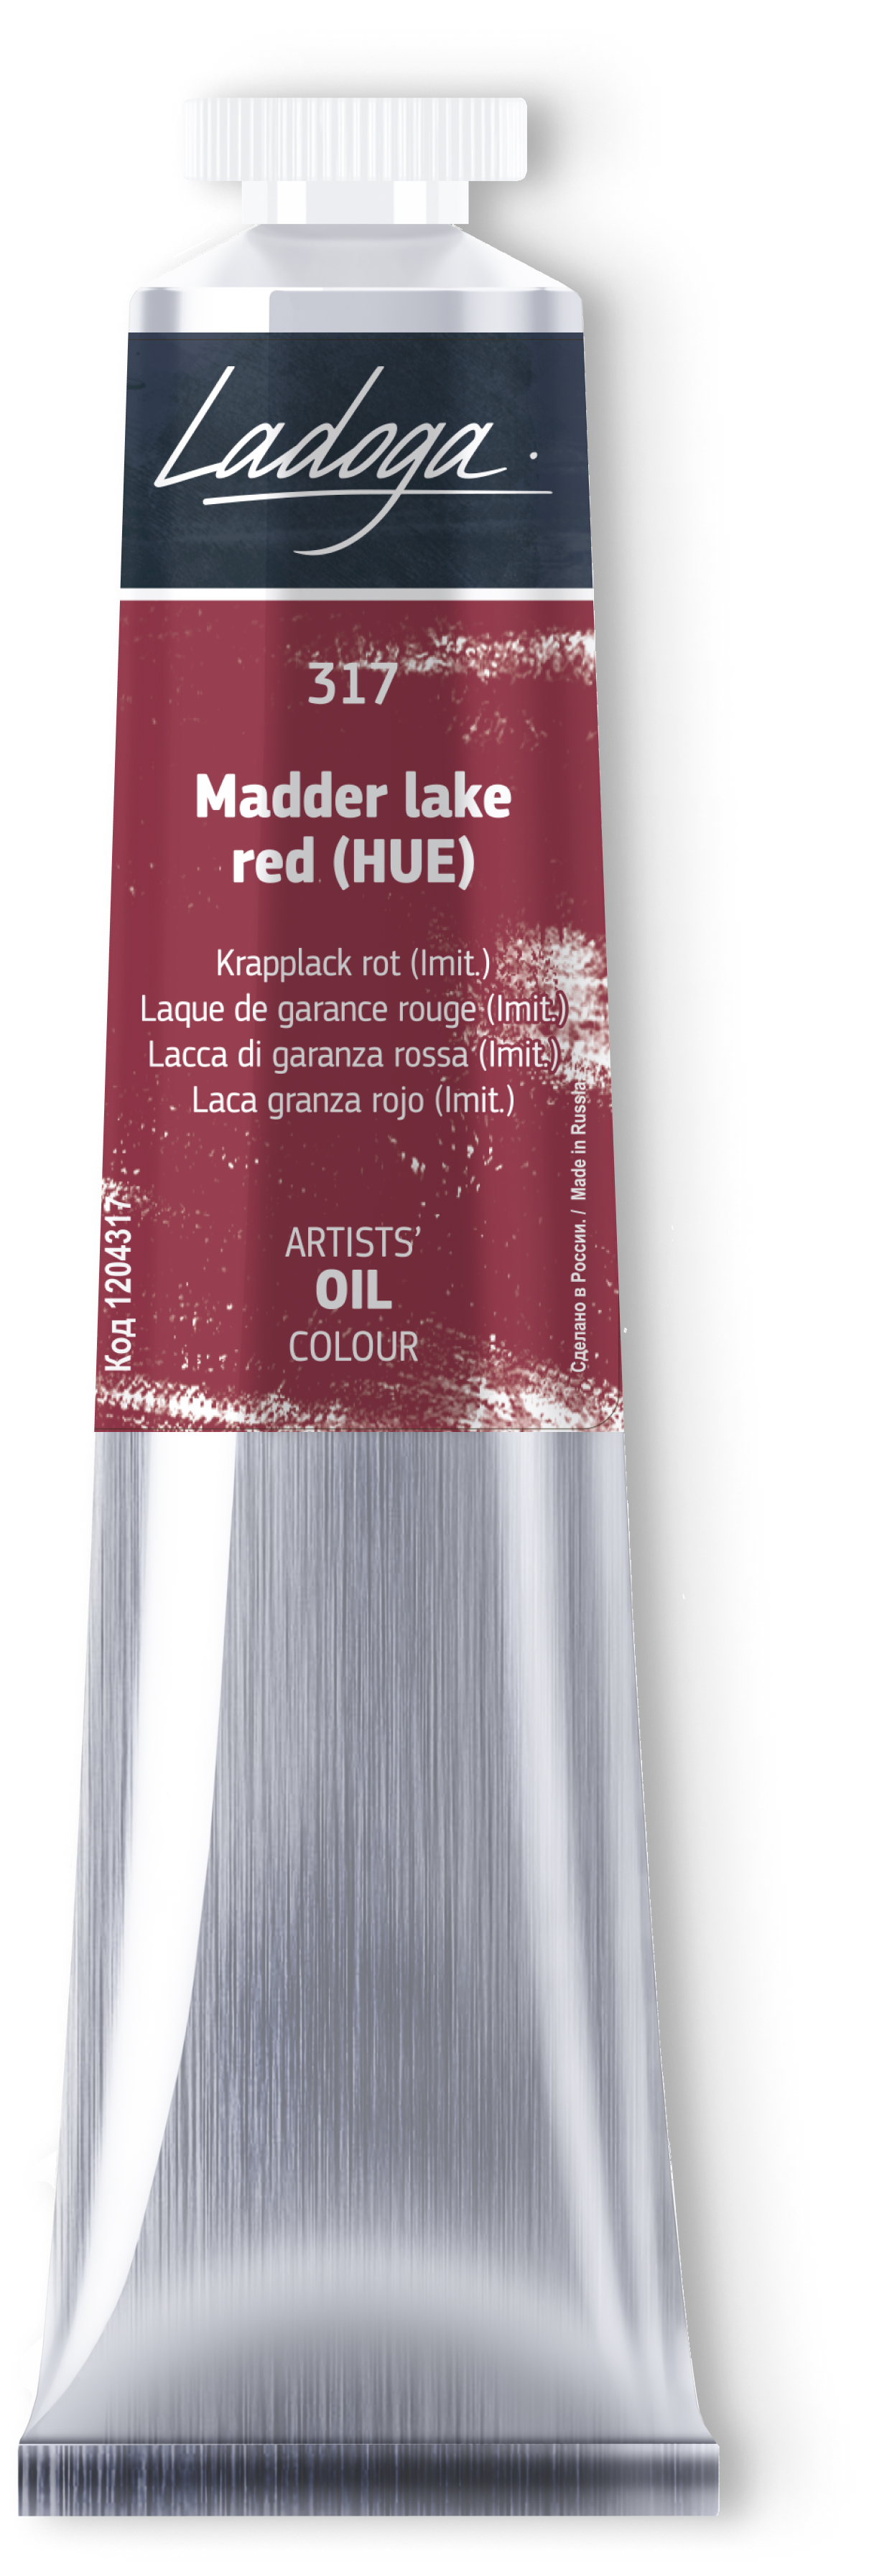 Oil colour "Ladoga", Madder lake red (HUE), tube, № 317